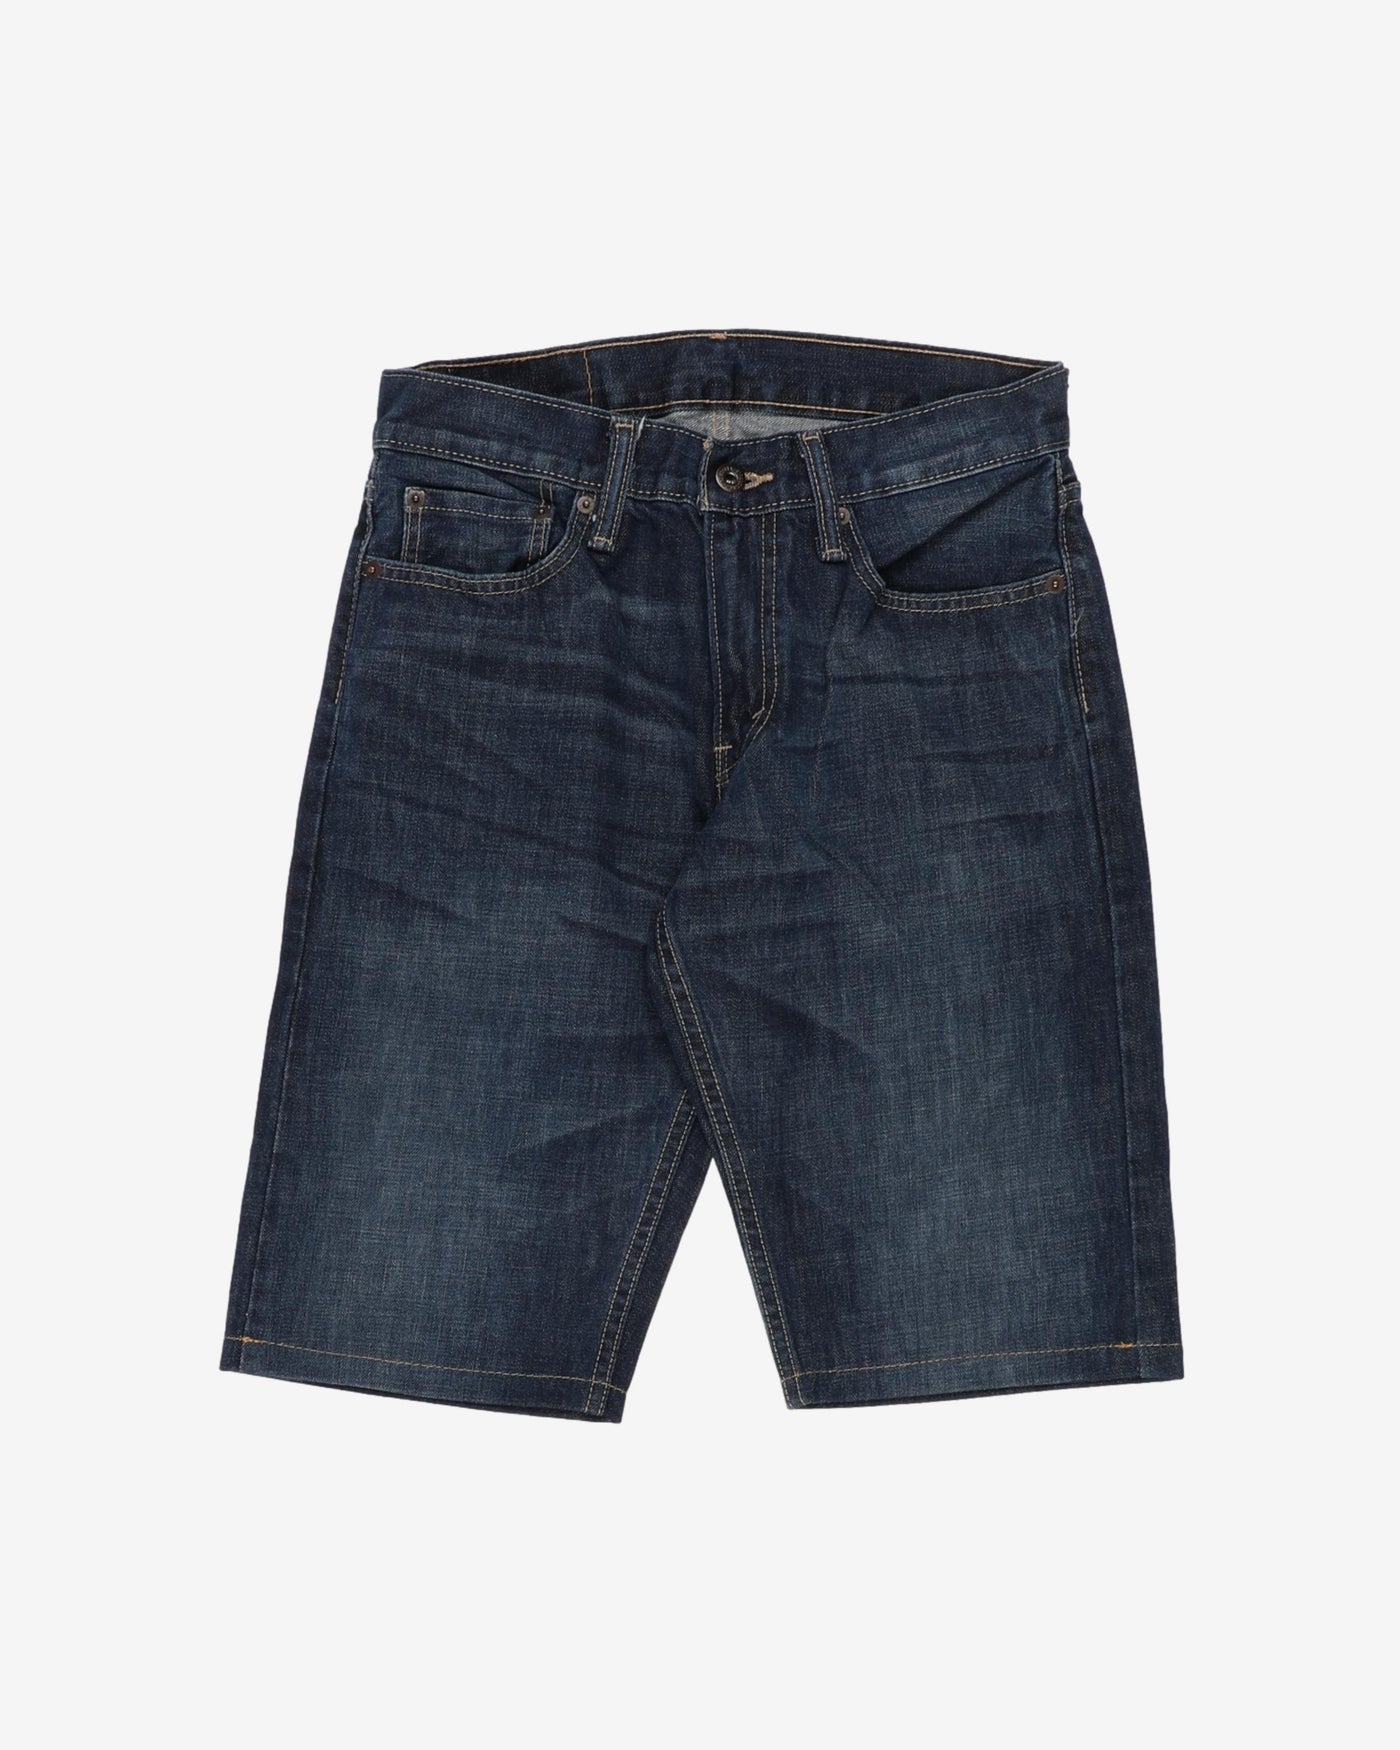 Levi's 514 Dark Blue Denim Jean Shorts - W30